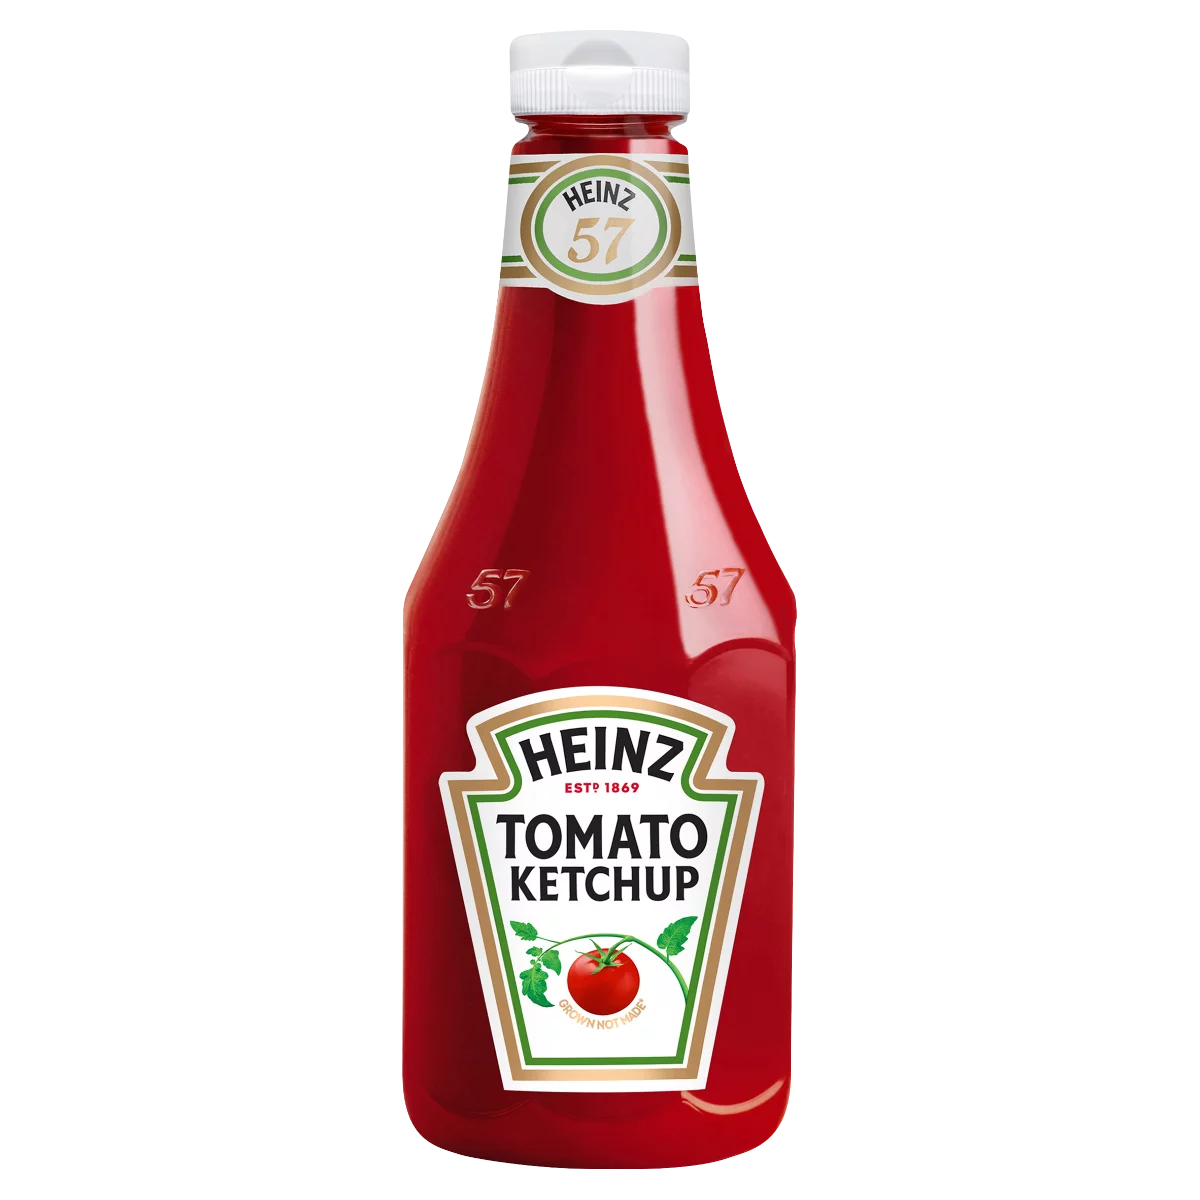 Heinz ketchup 1kg